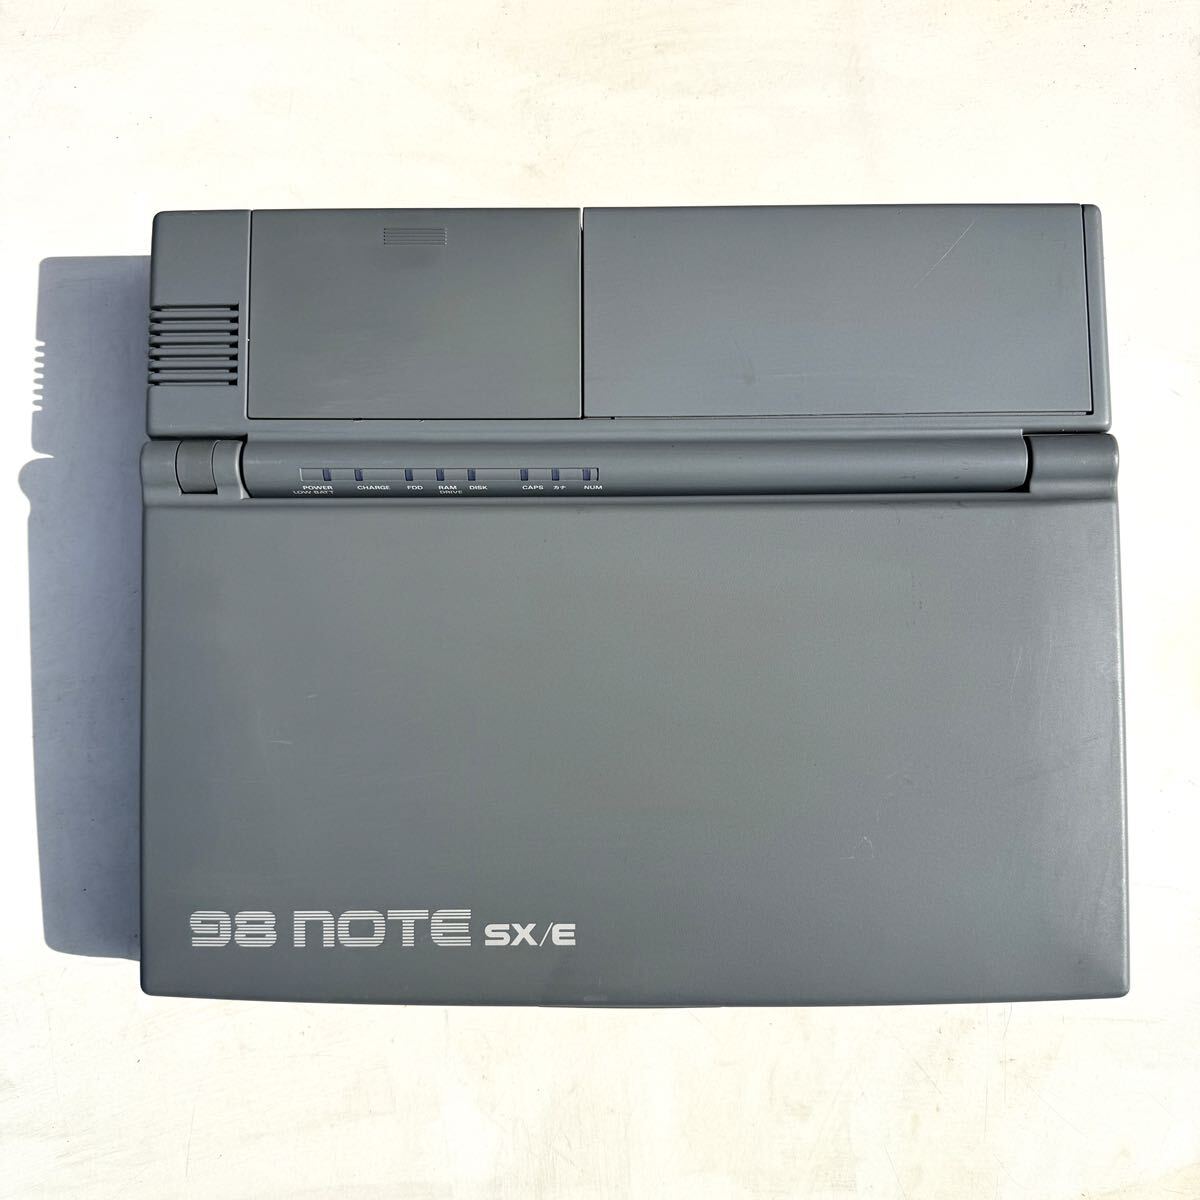 NEC PC-9801 NS|E40 PC Junk personal computer notebook 98NOTE sx/e Yamagata ..